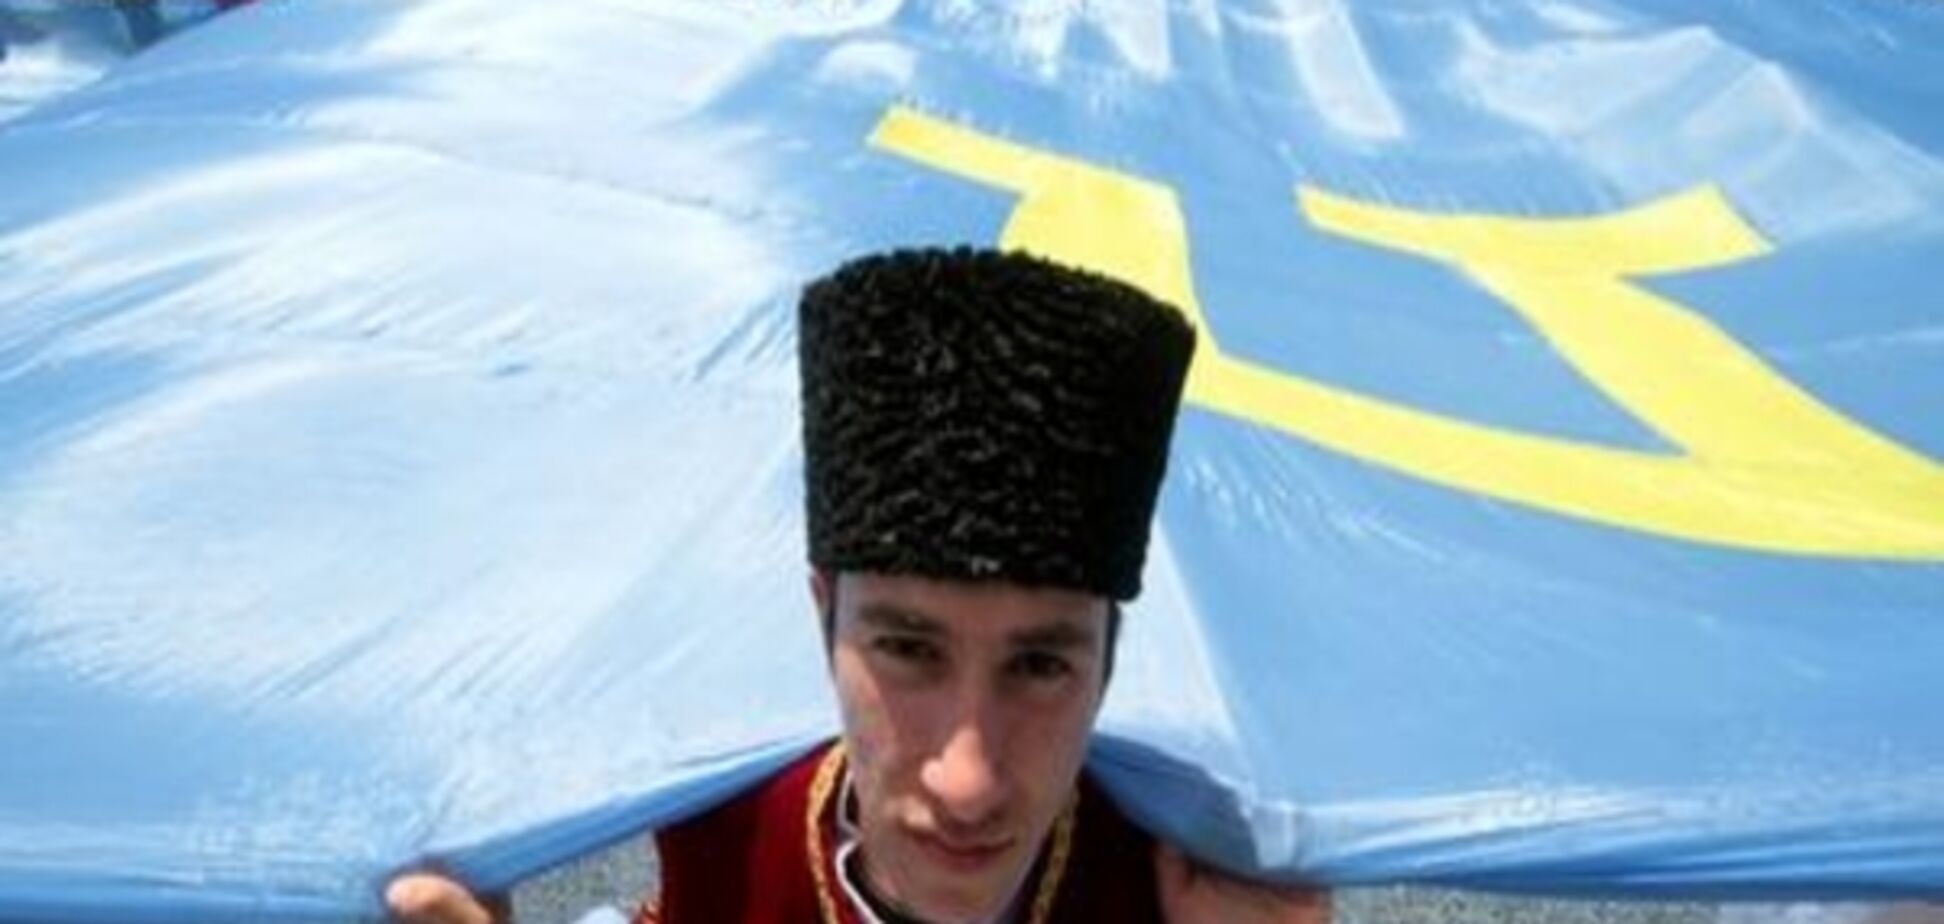 Микола Полозов: ФСБ хоче позбавити кримських татар права на захист